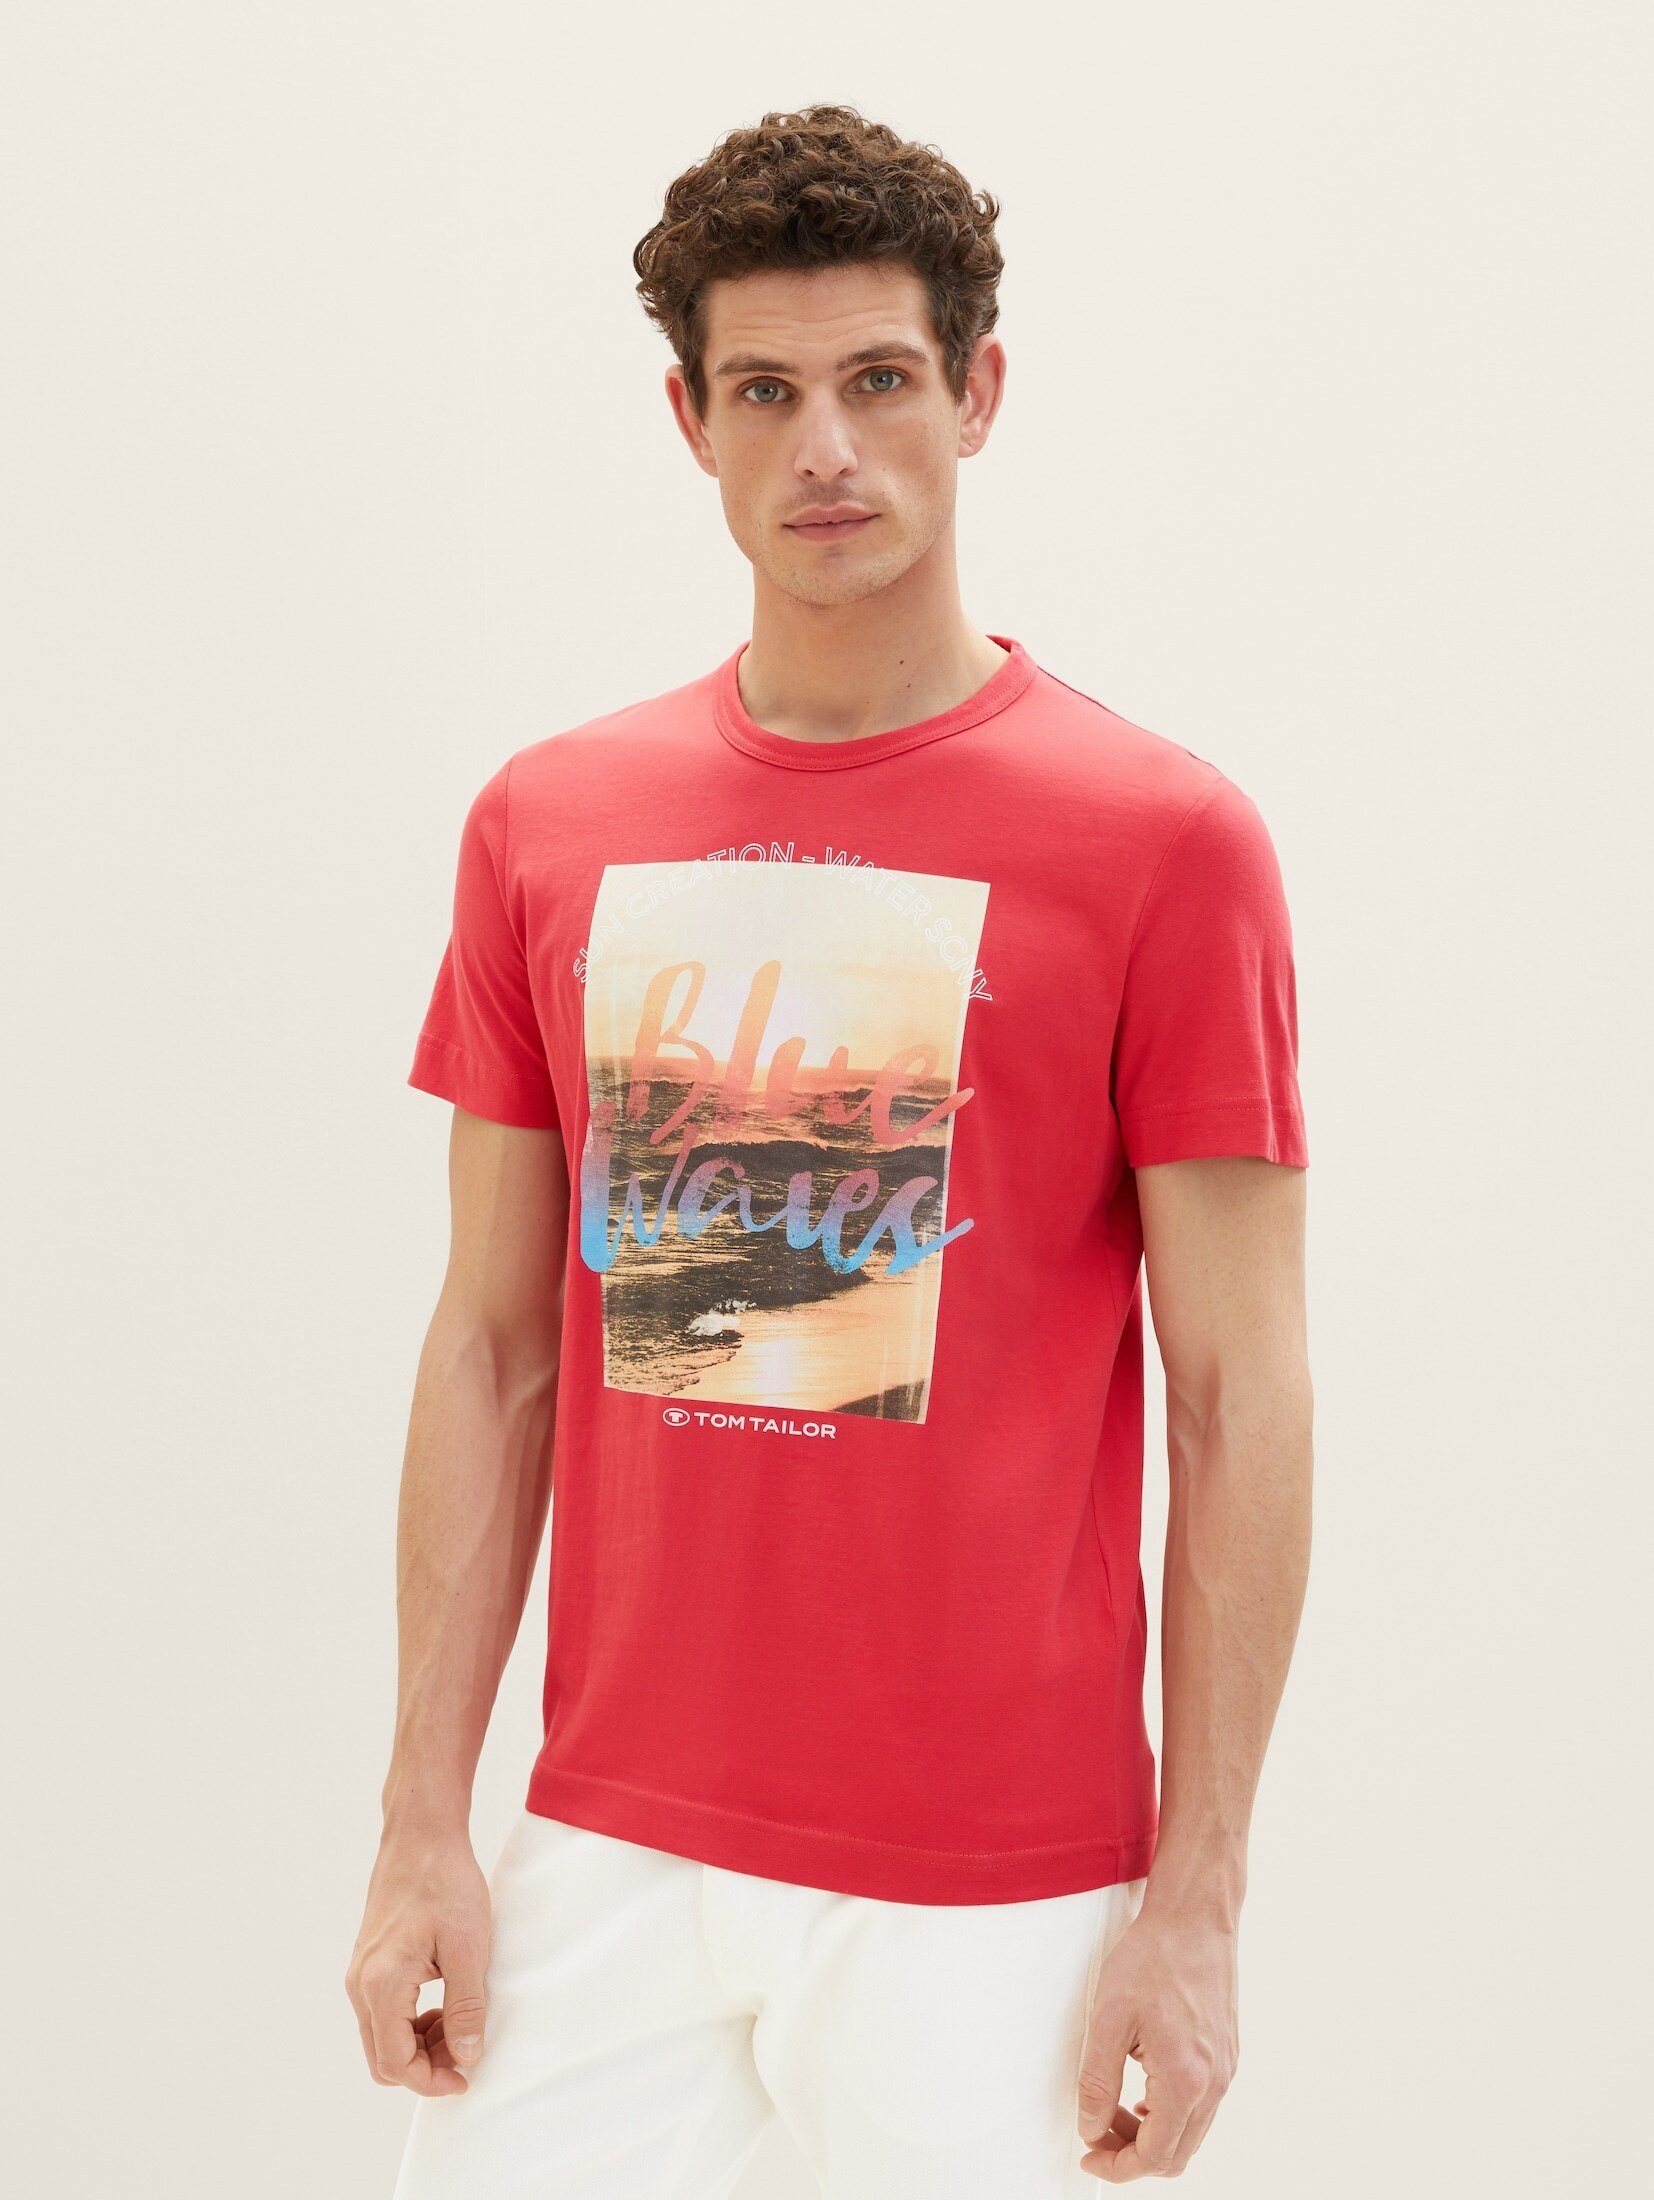 TOM TAILOR T-Shirt T-Shirt mit Fotoprint soft berry red